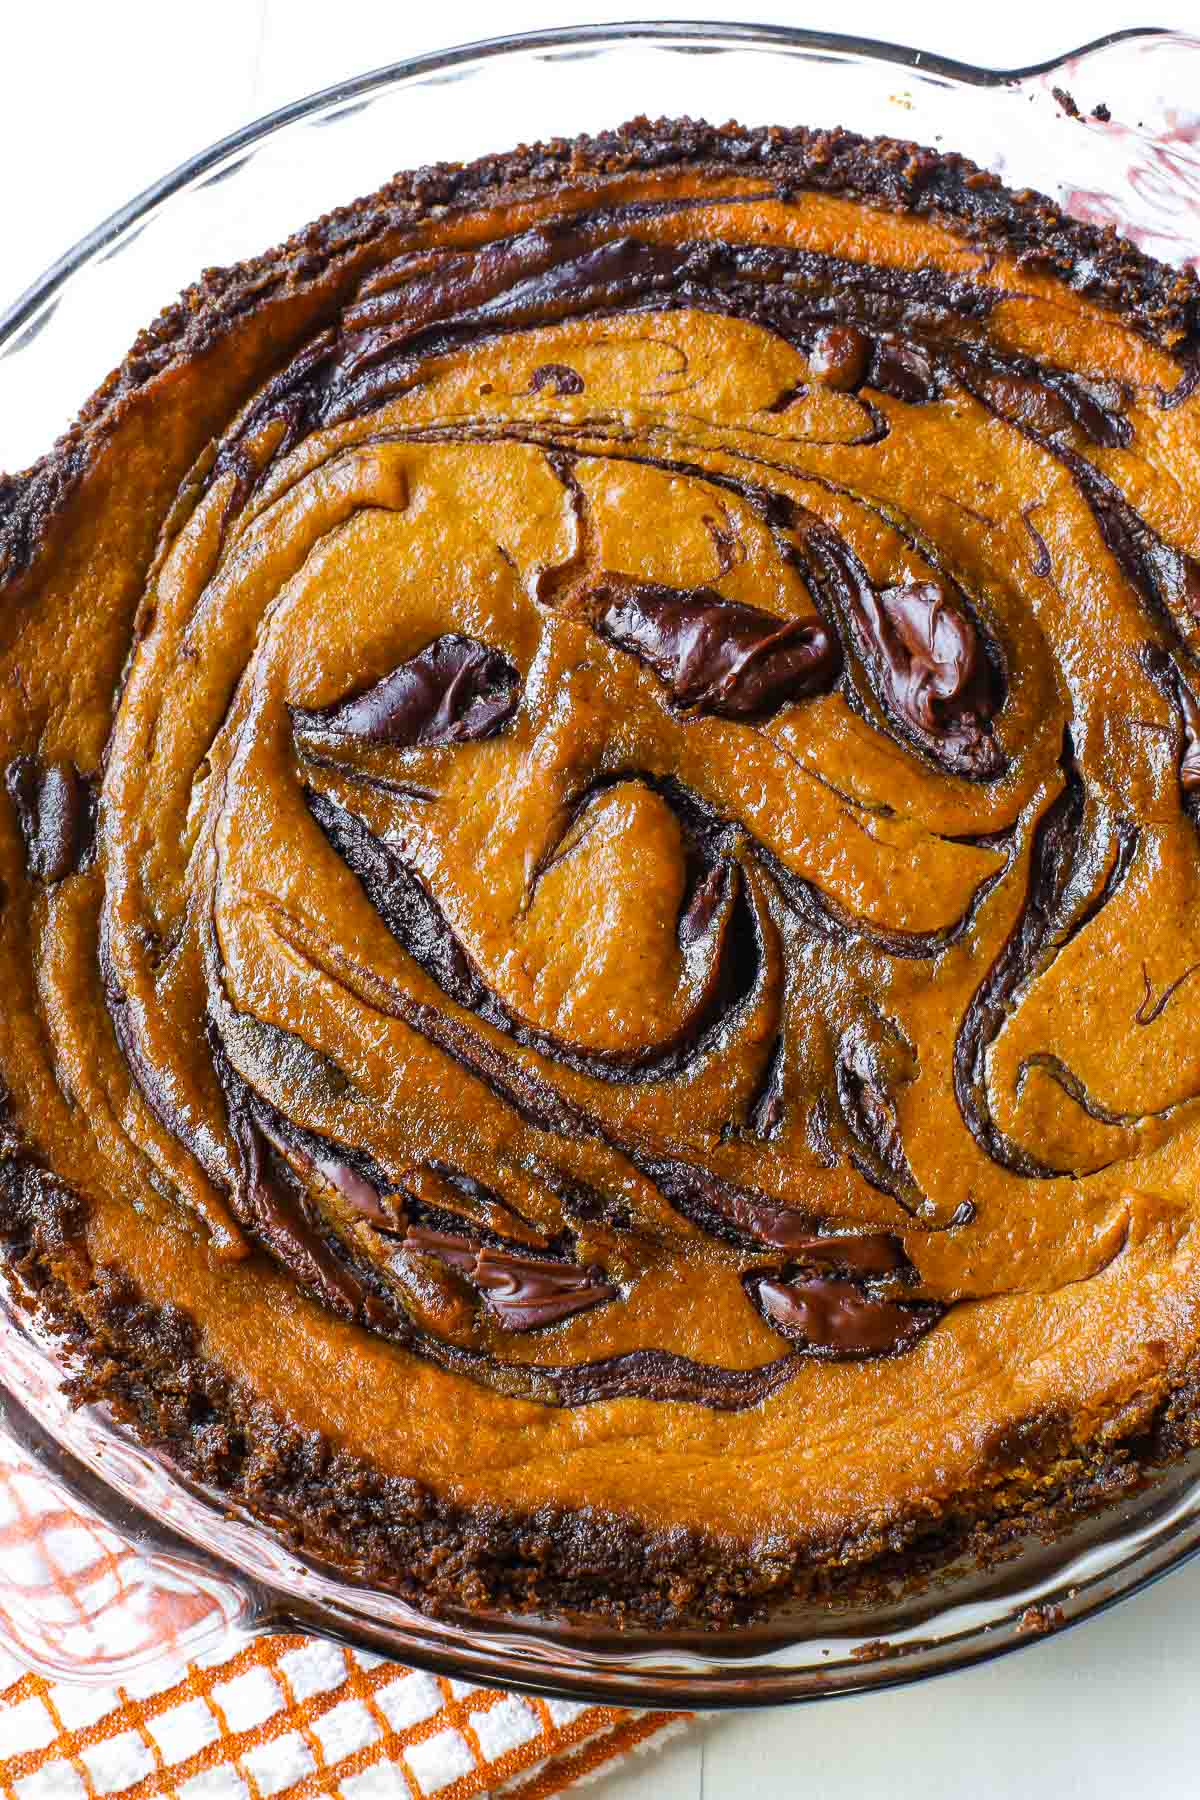 18 Unique Pumpkin Pie Recipes